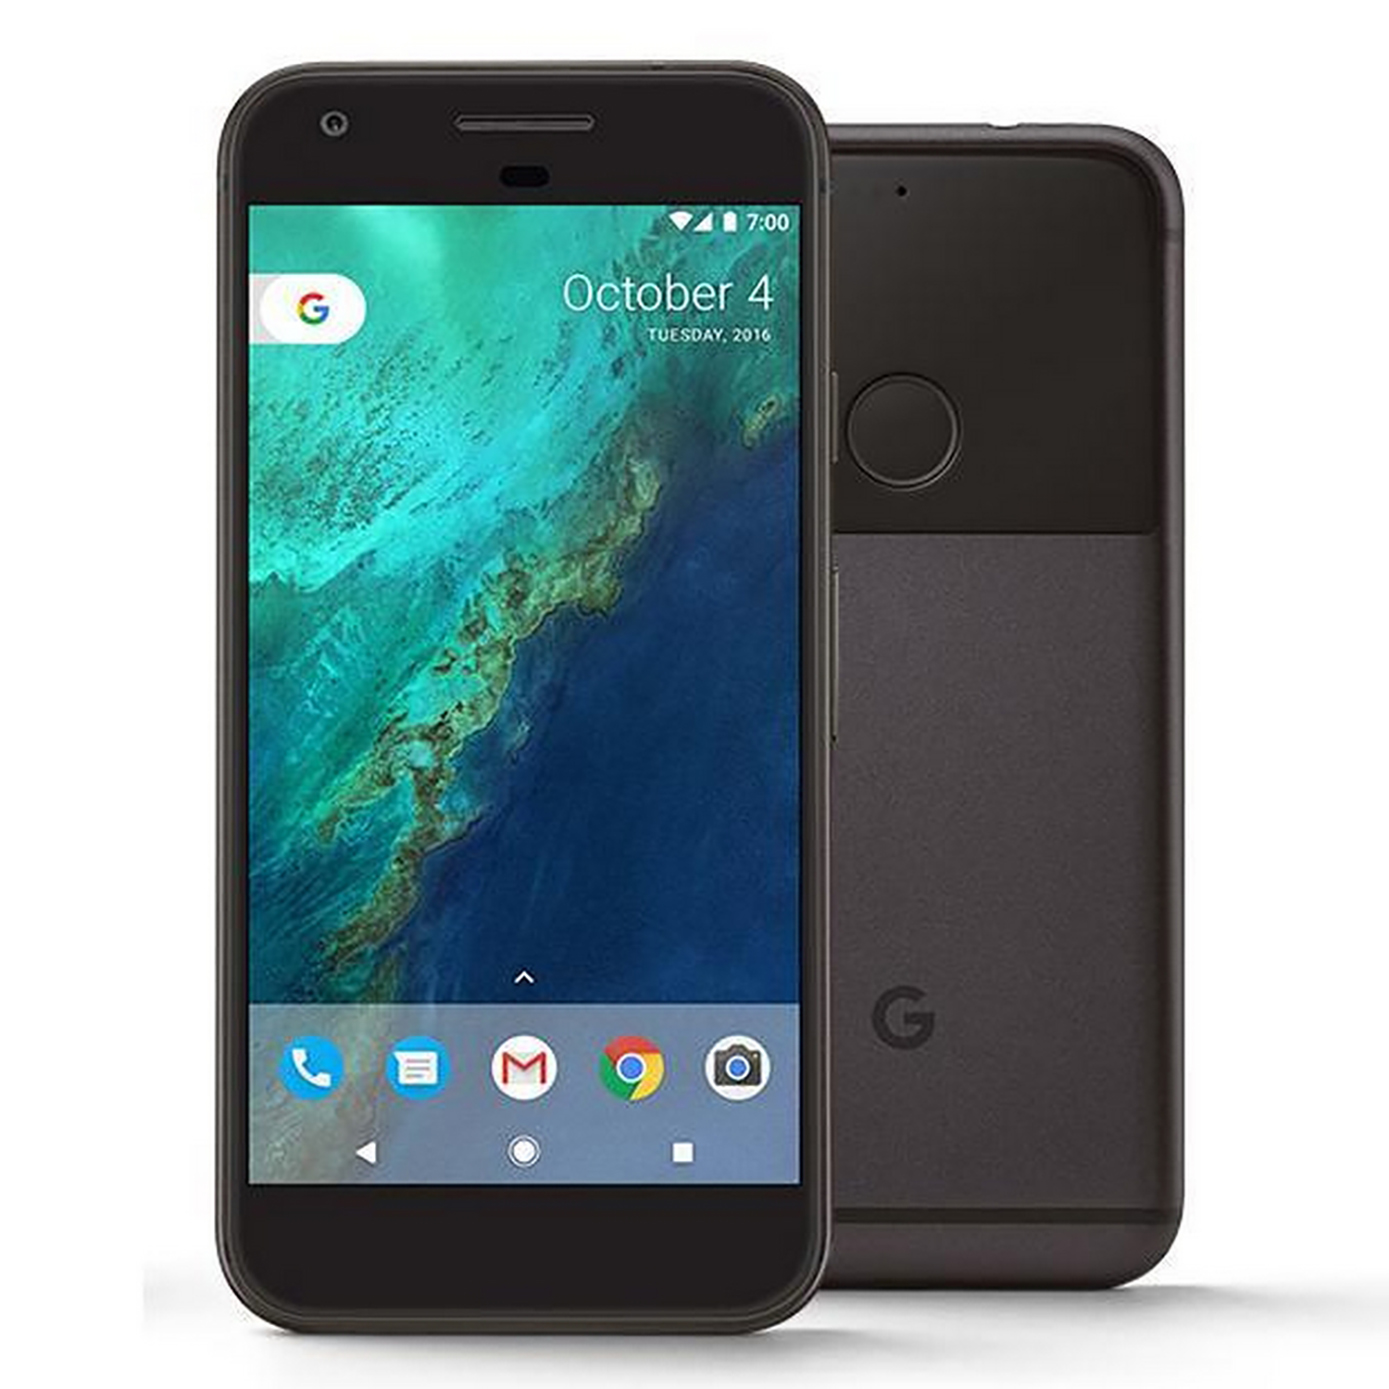 Google Pixel XL 128GB Unlocked GSM Phone w/ 12.3MP Camera - Quite Black - image 3 of 4